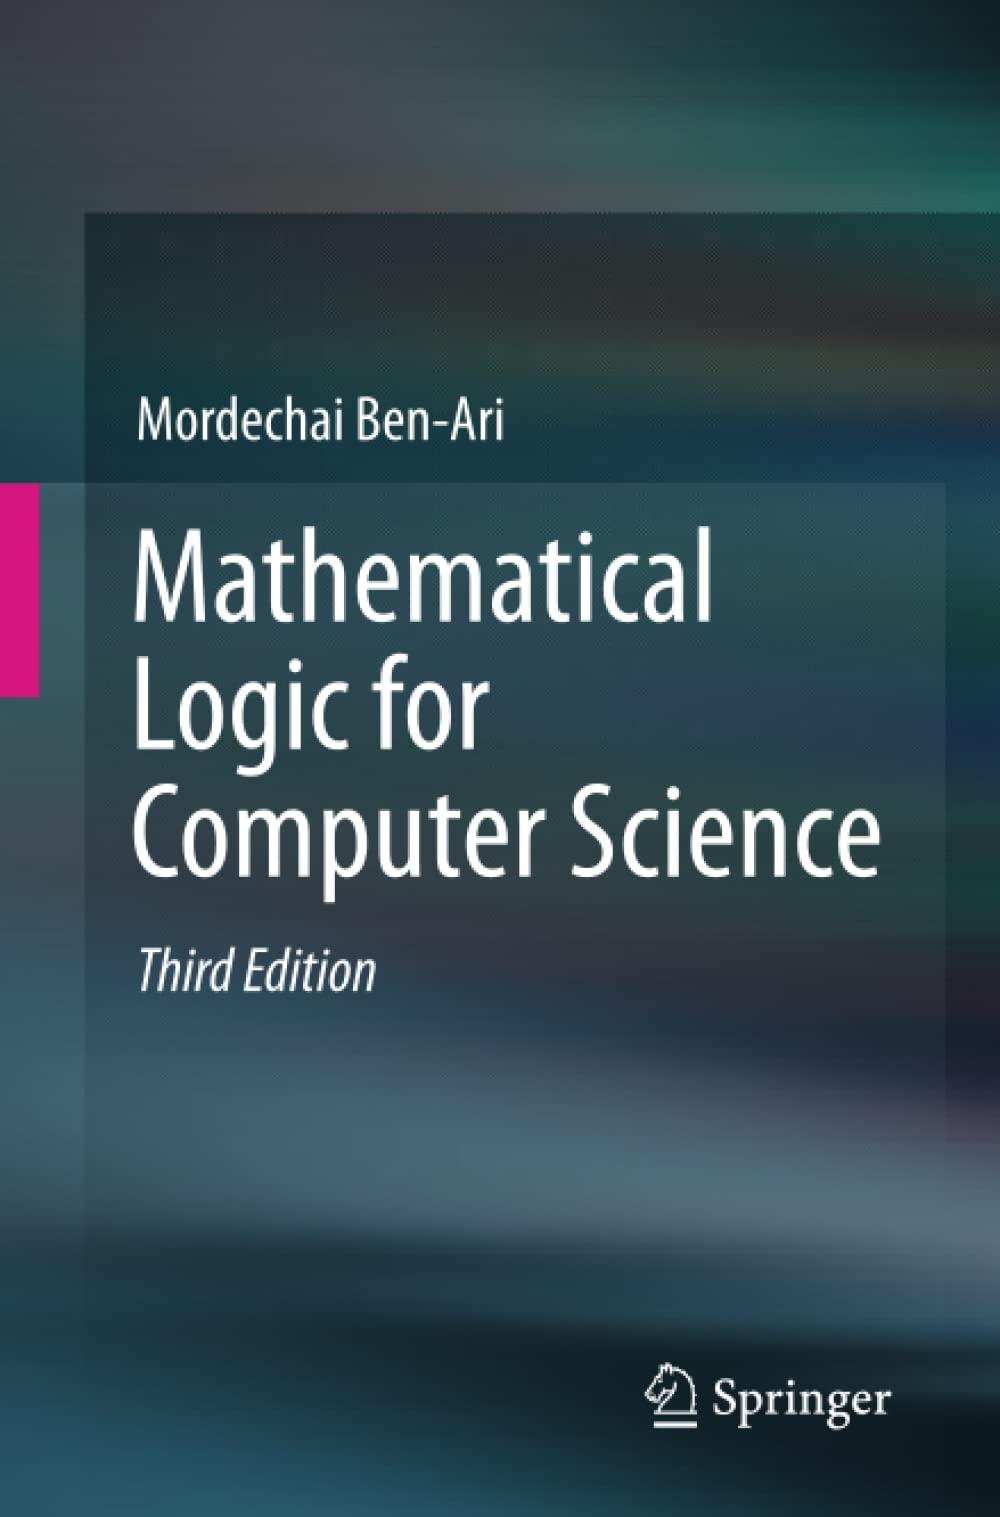 mathematical logic for computer science 3rd edition mordechai ben-ari 1447141288, 9781447141280